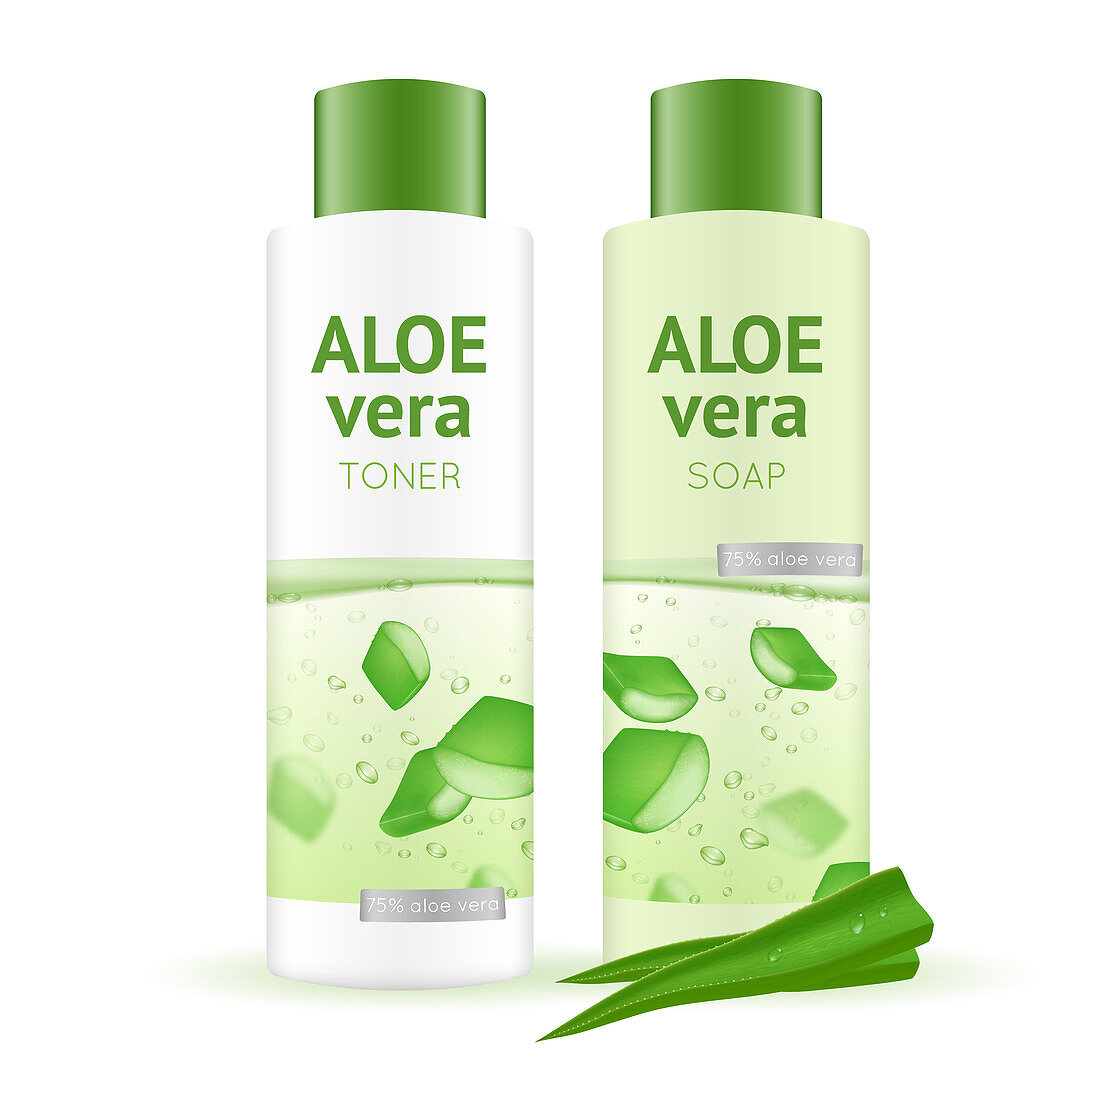 Aloe vera products, illustration